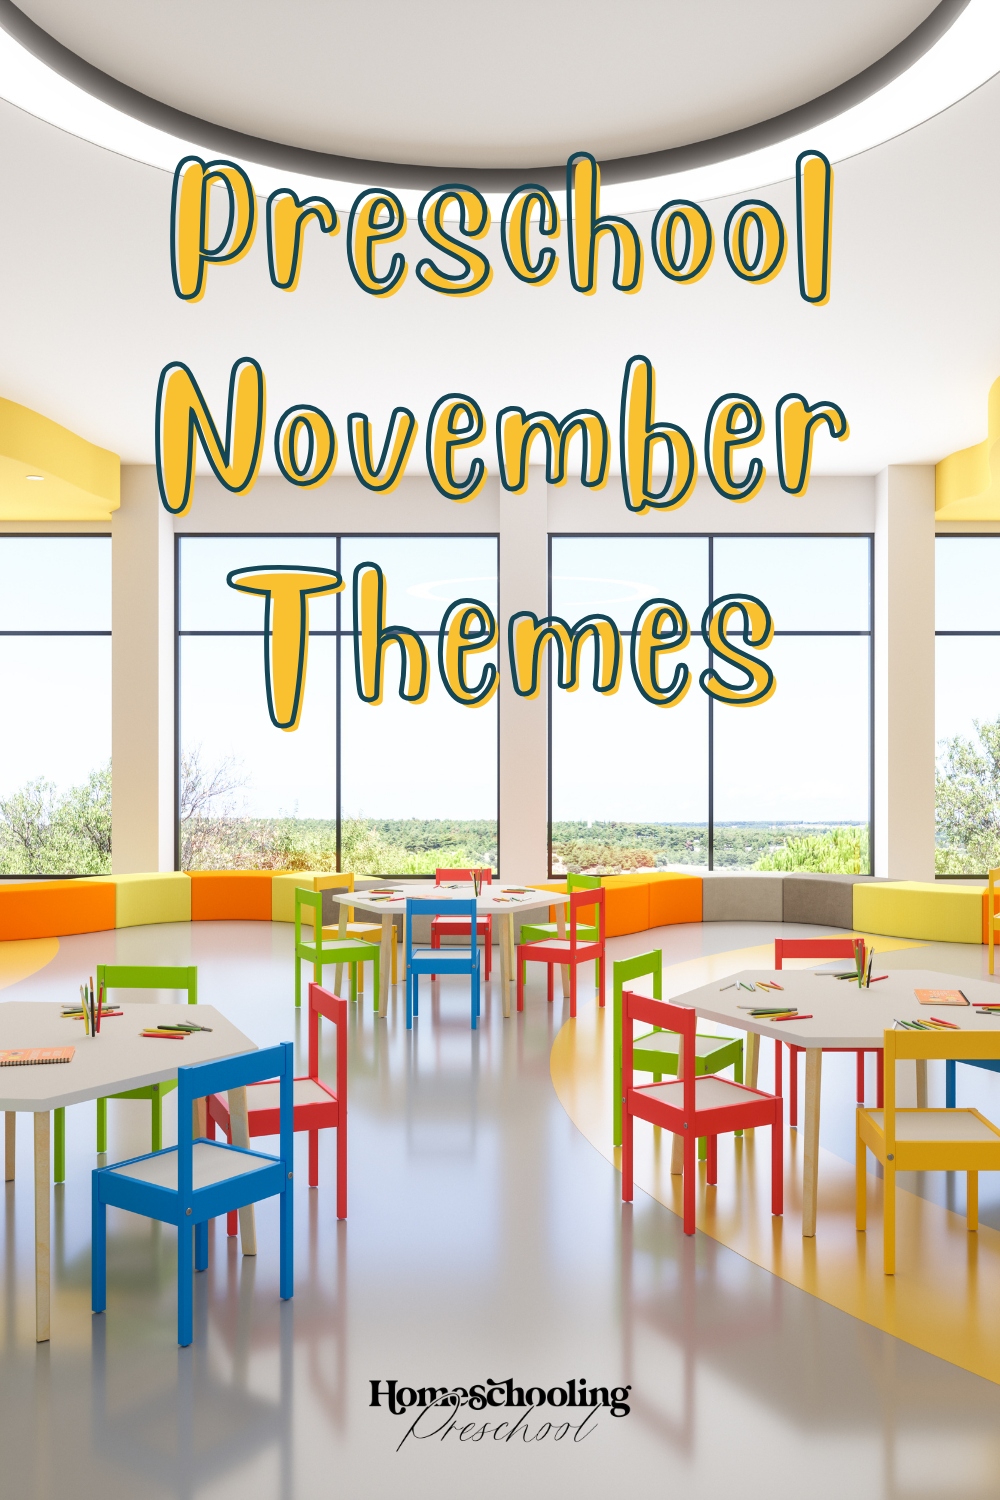 Preschool November Themes